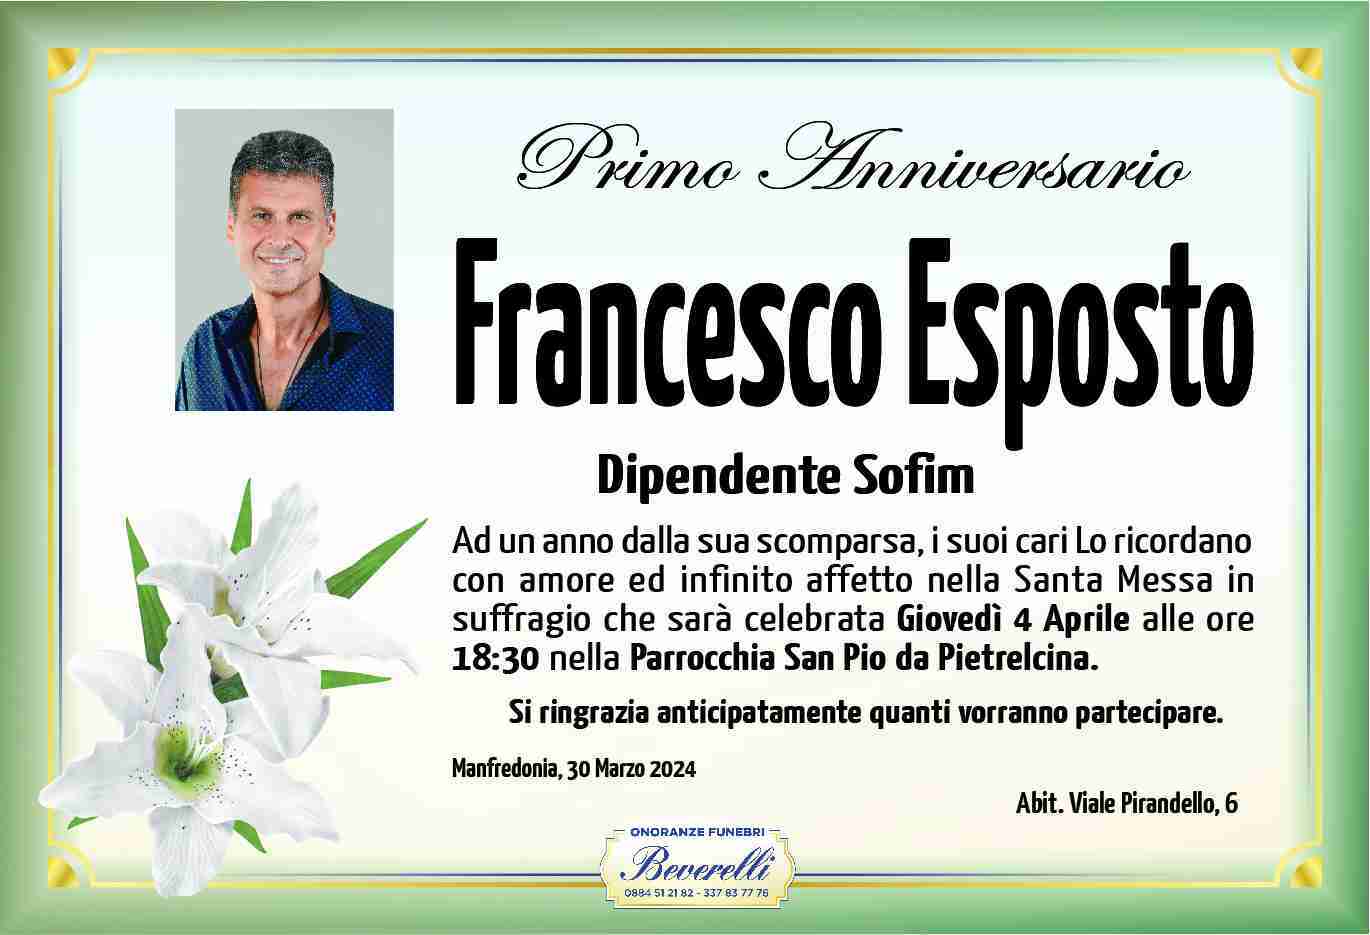 Francesco Esposto